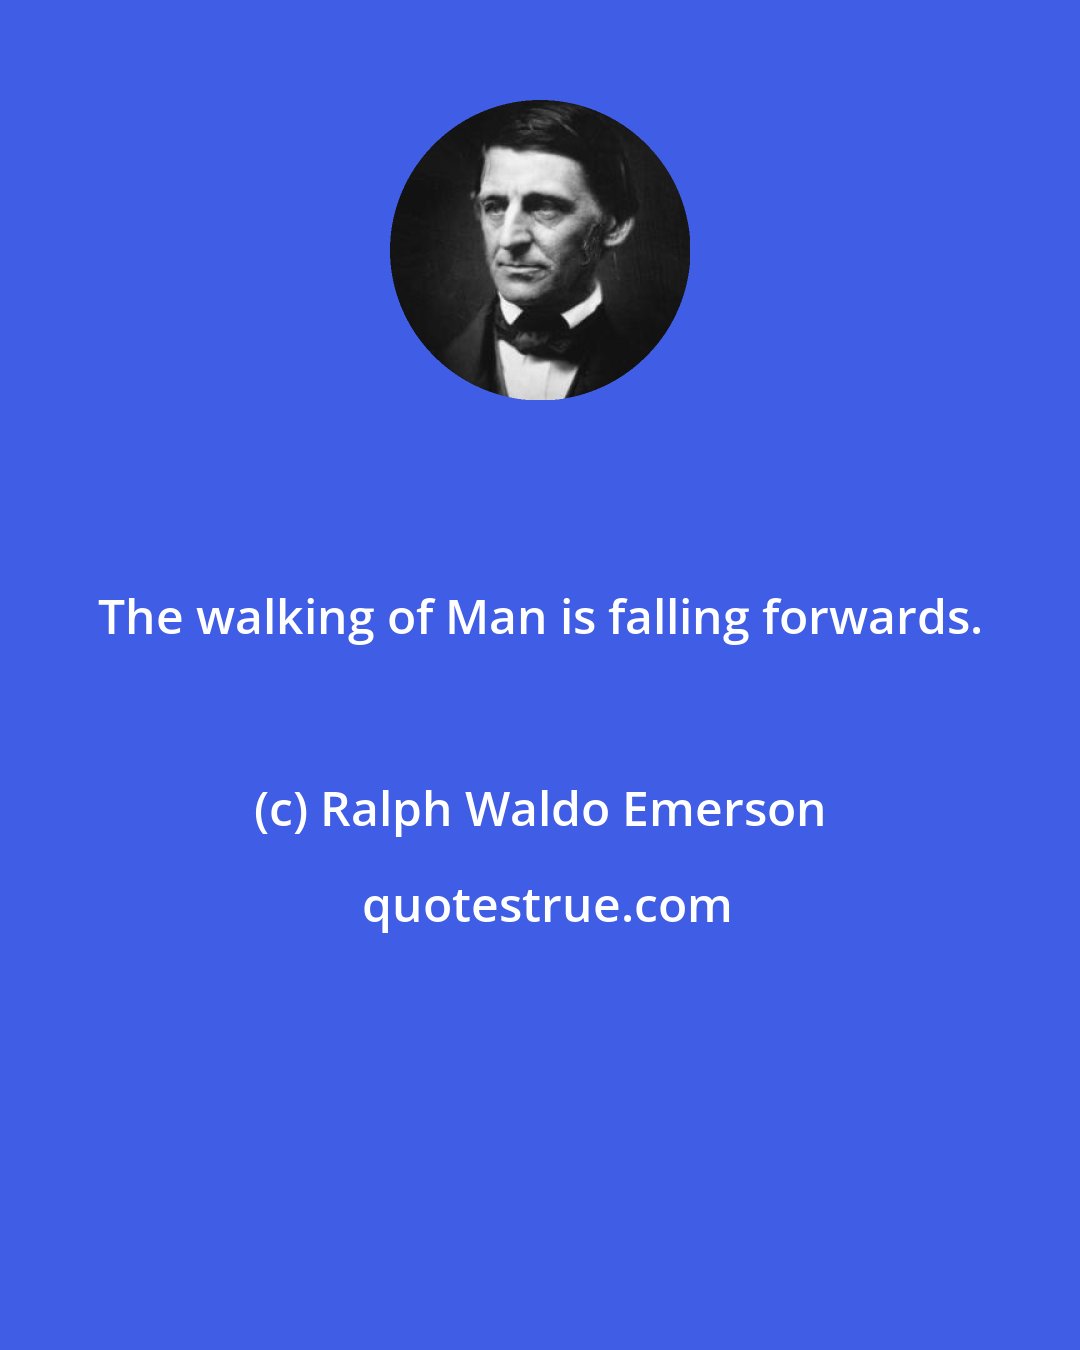 Ralph Waldo Emerson: The walking of Man is falling forwards.